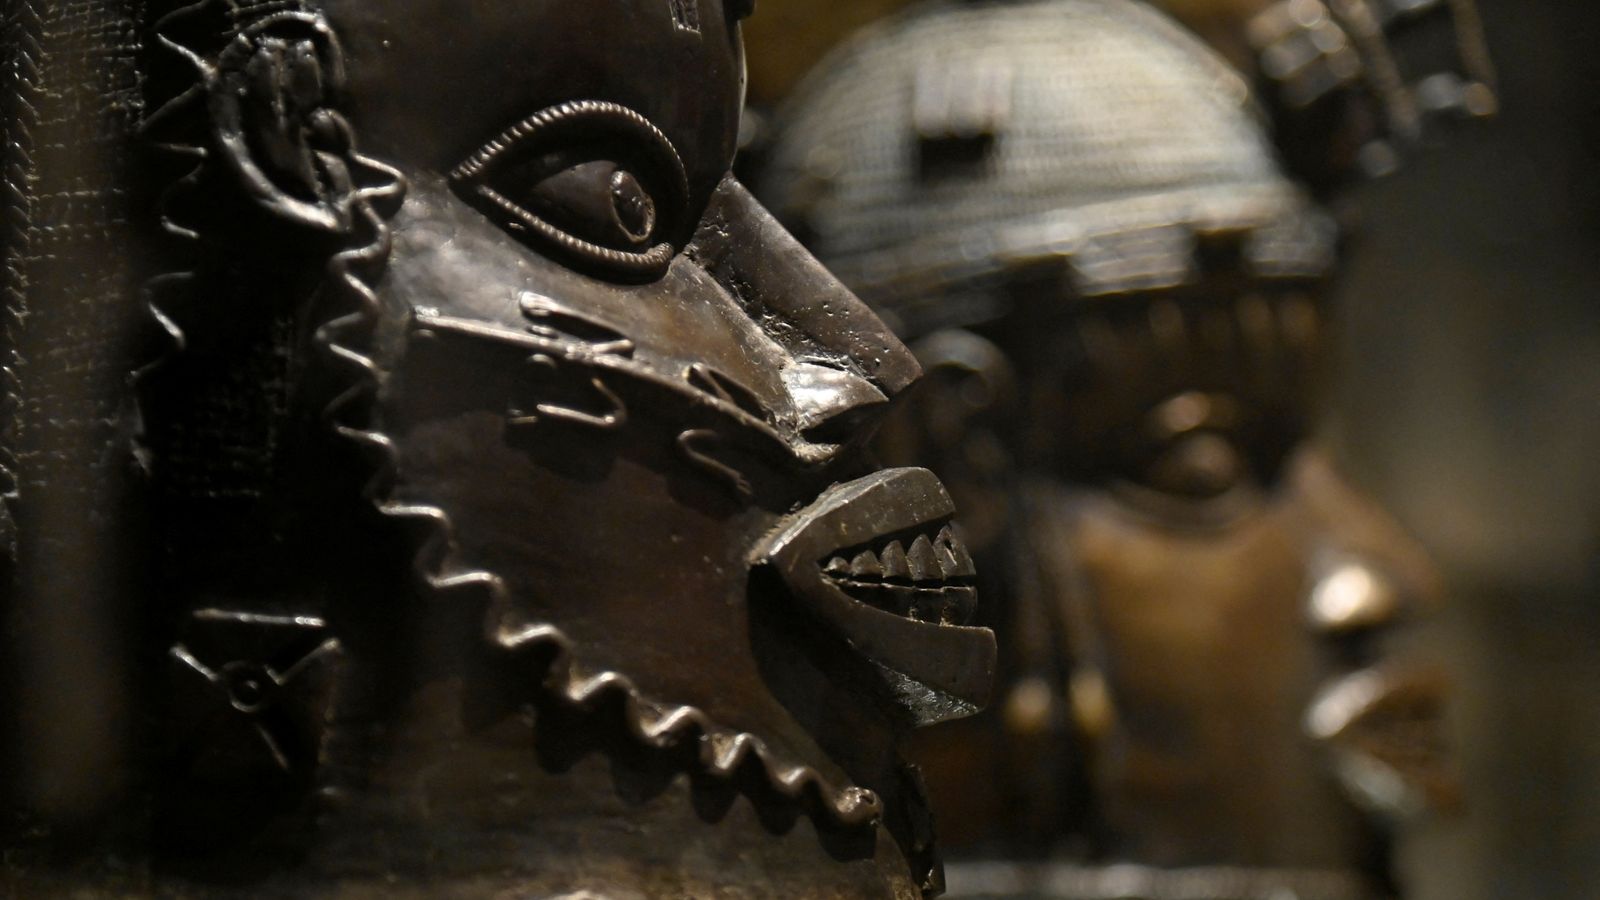 Nigeria demands return of Benin bronzes after thefts from British Museum